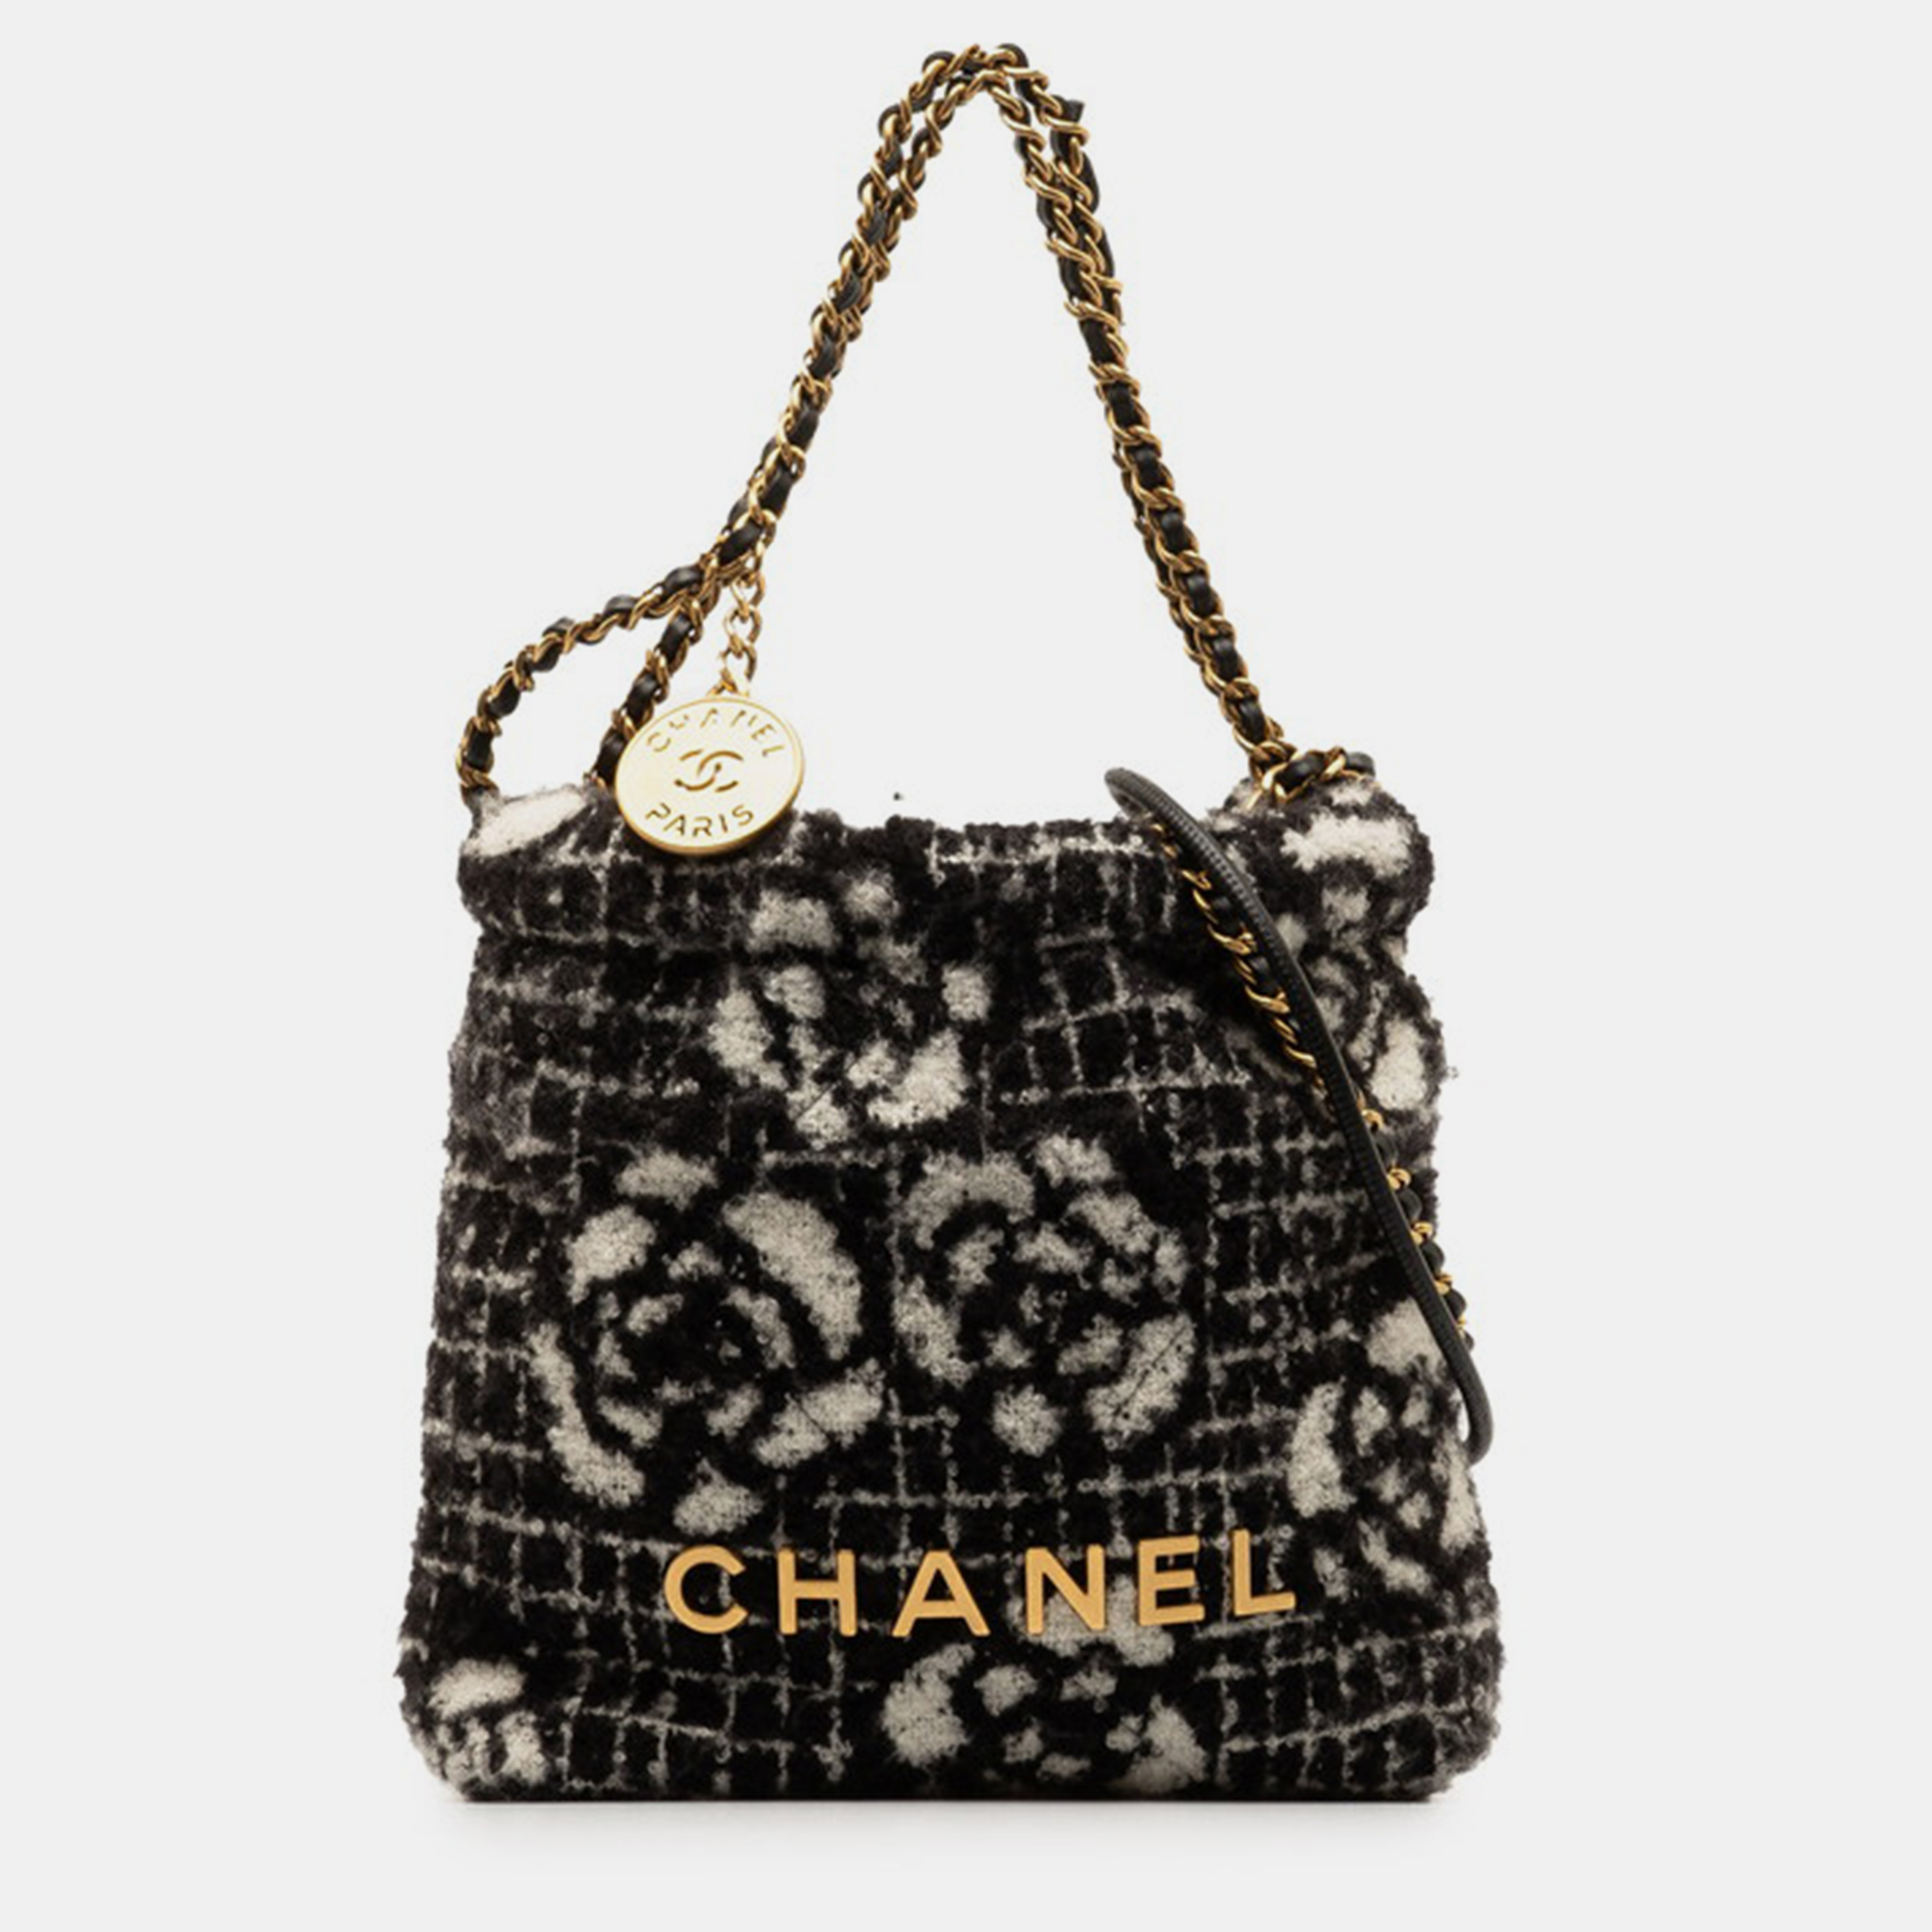 Chanel black cotton camellia chanel 22 hobo bag